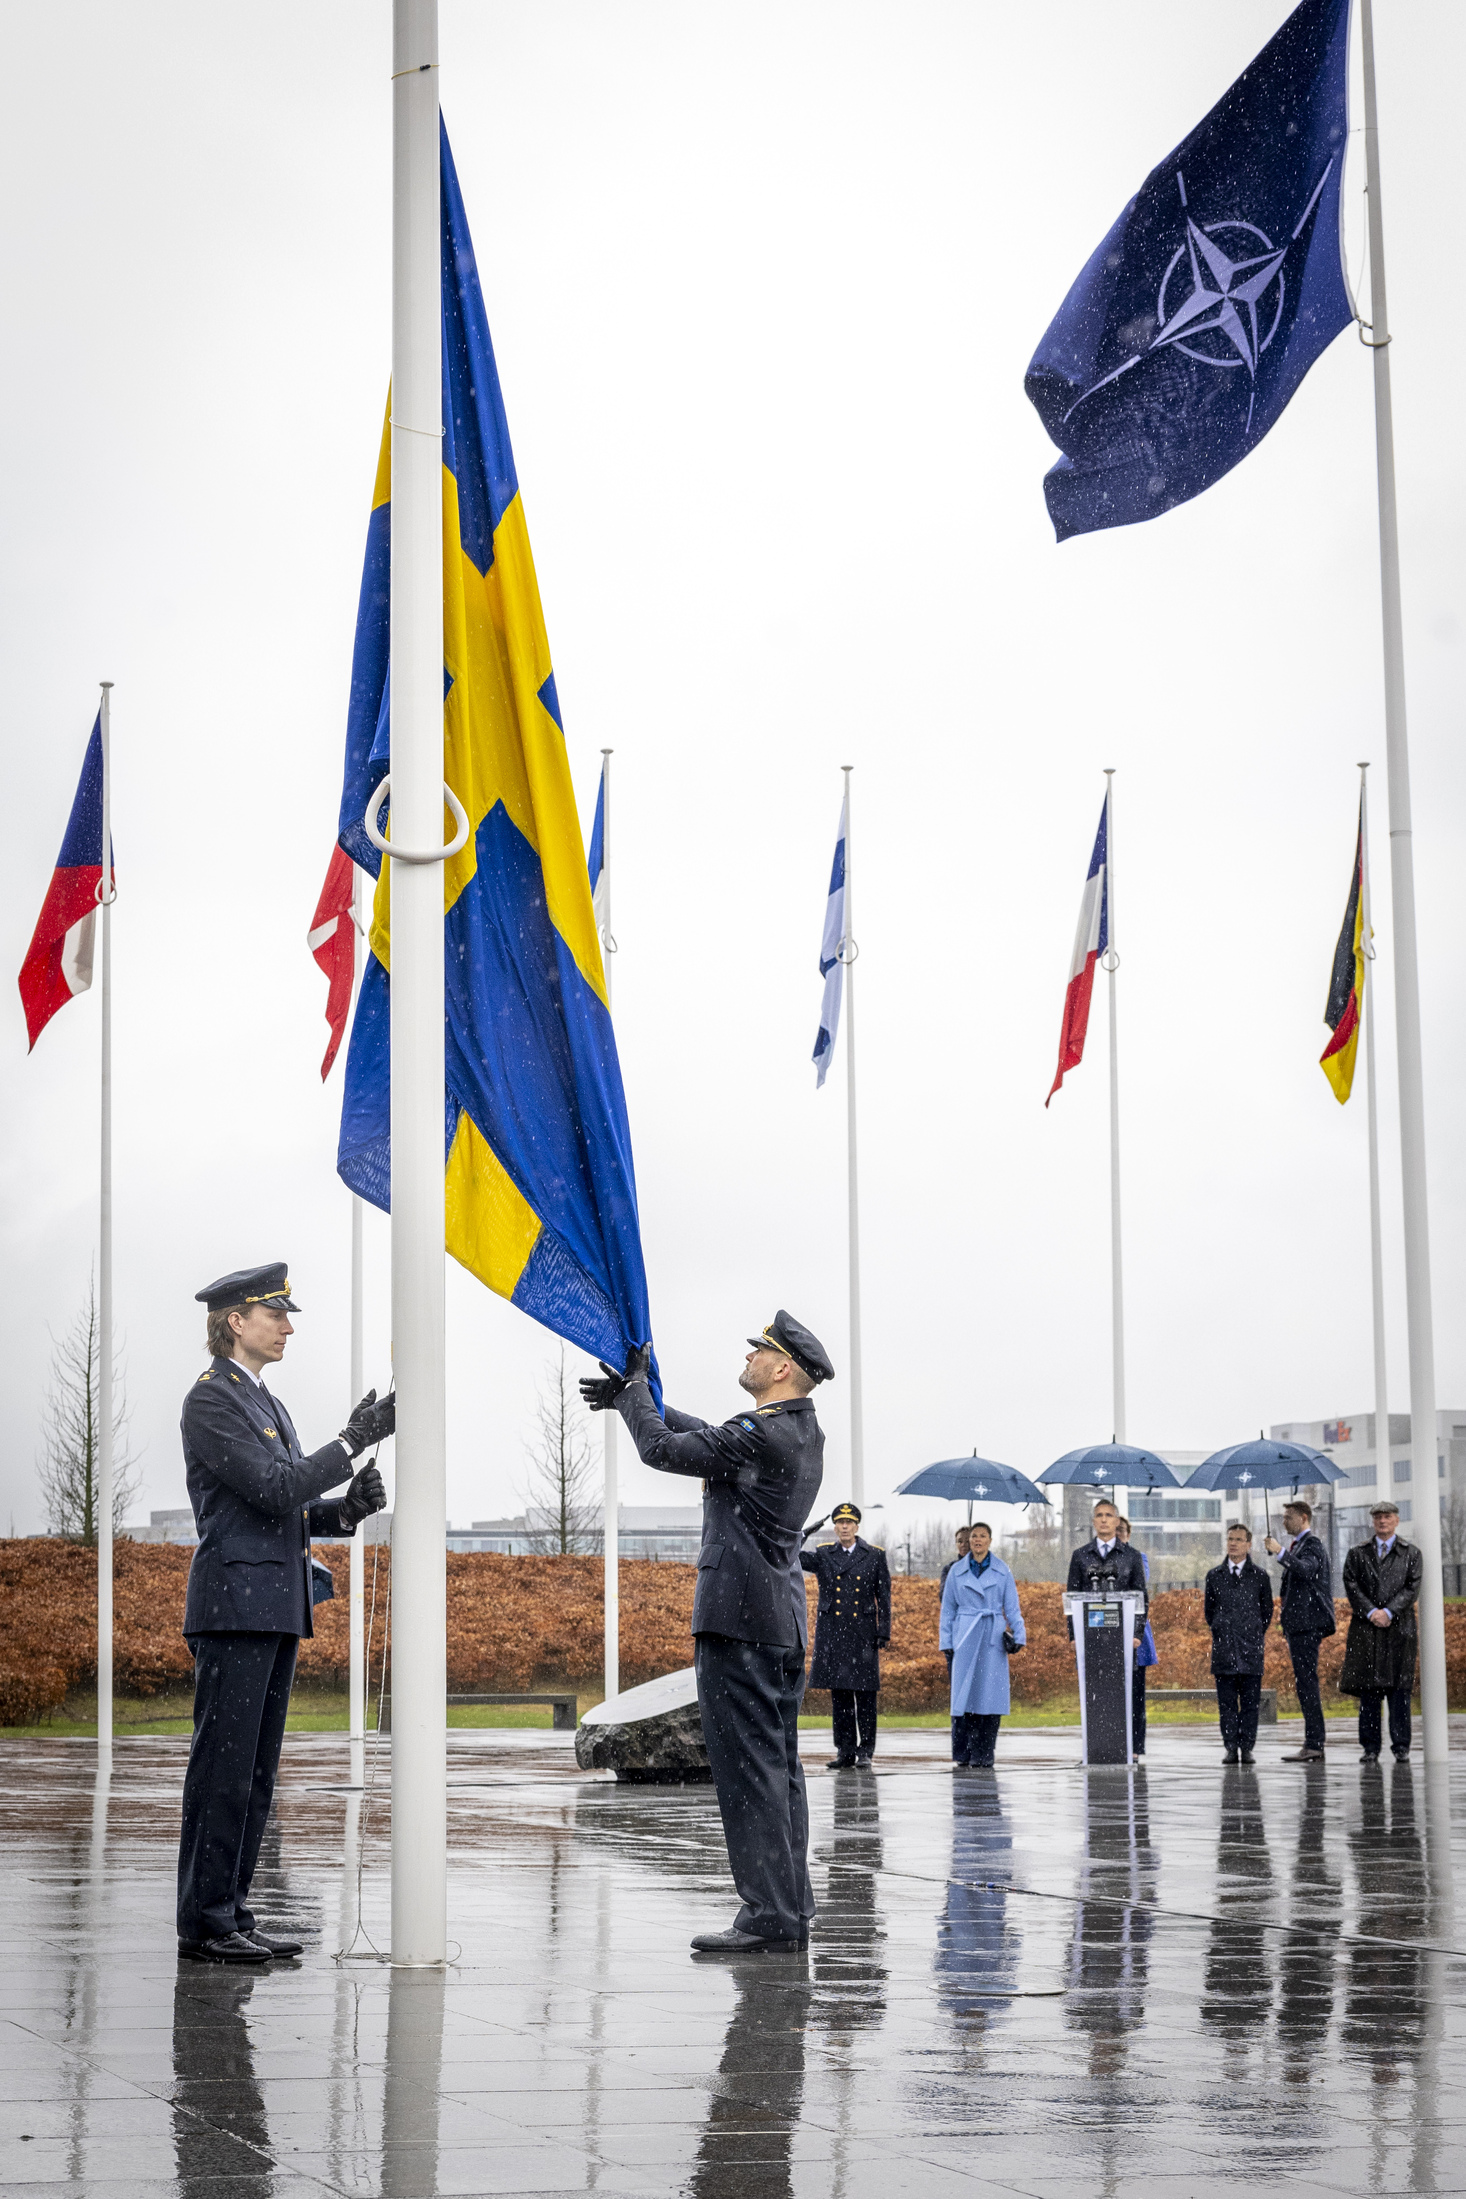 Swedish flag raised at NATO Headquarters